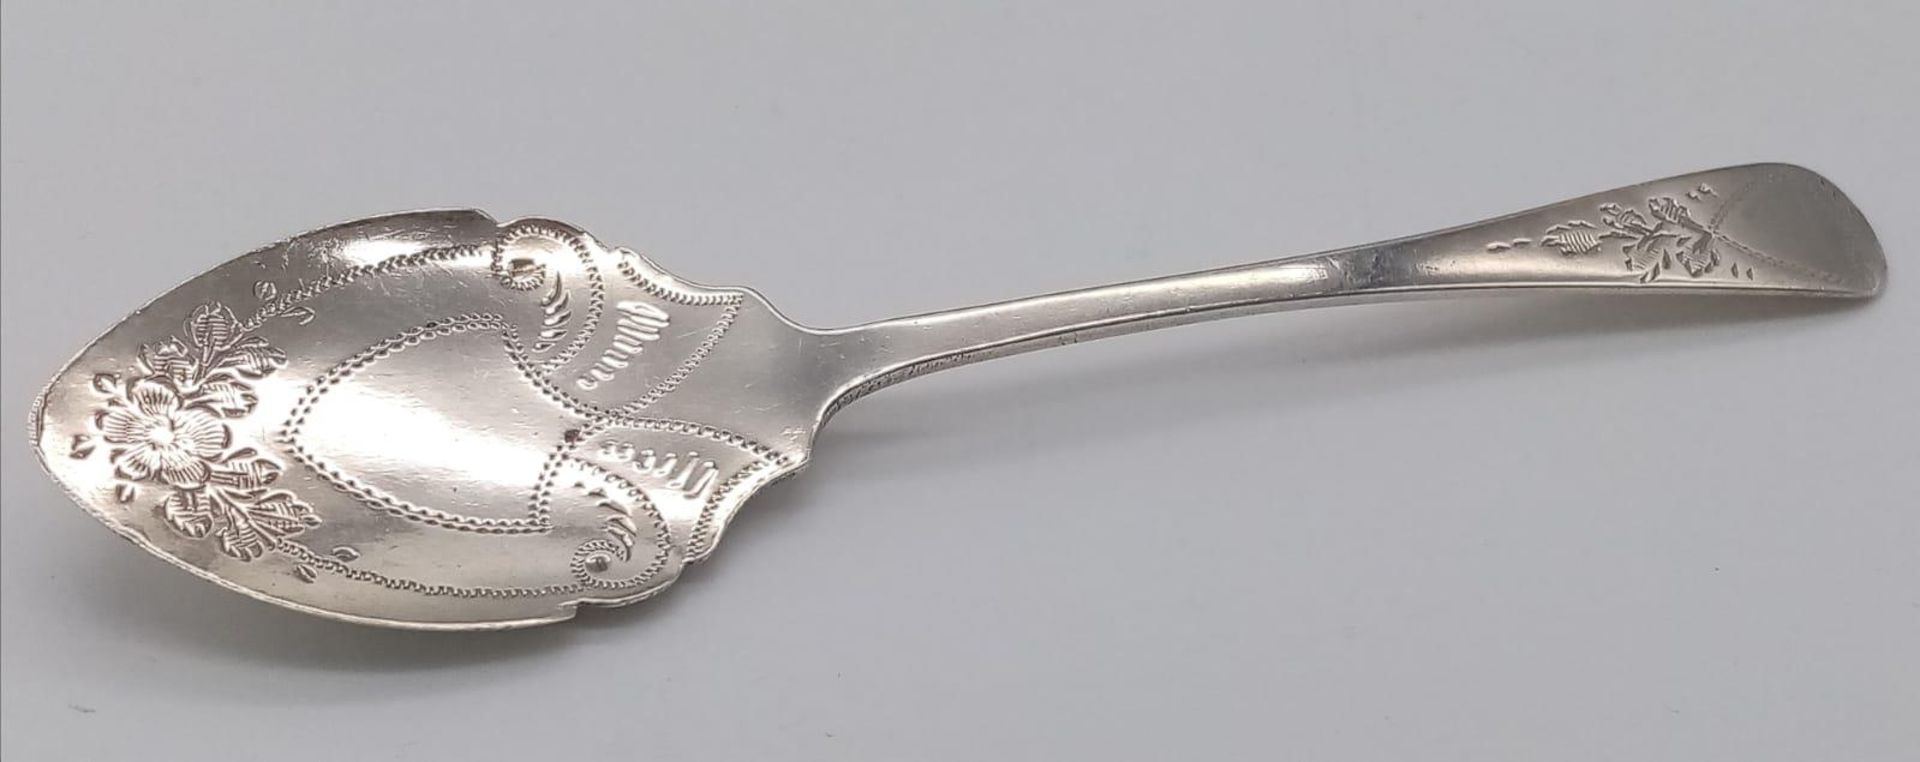 An antique sterling silver luxurious dessert spoon. Full hallmarks Sheffield, 1901. Total weight